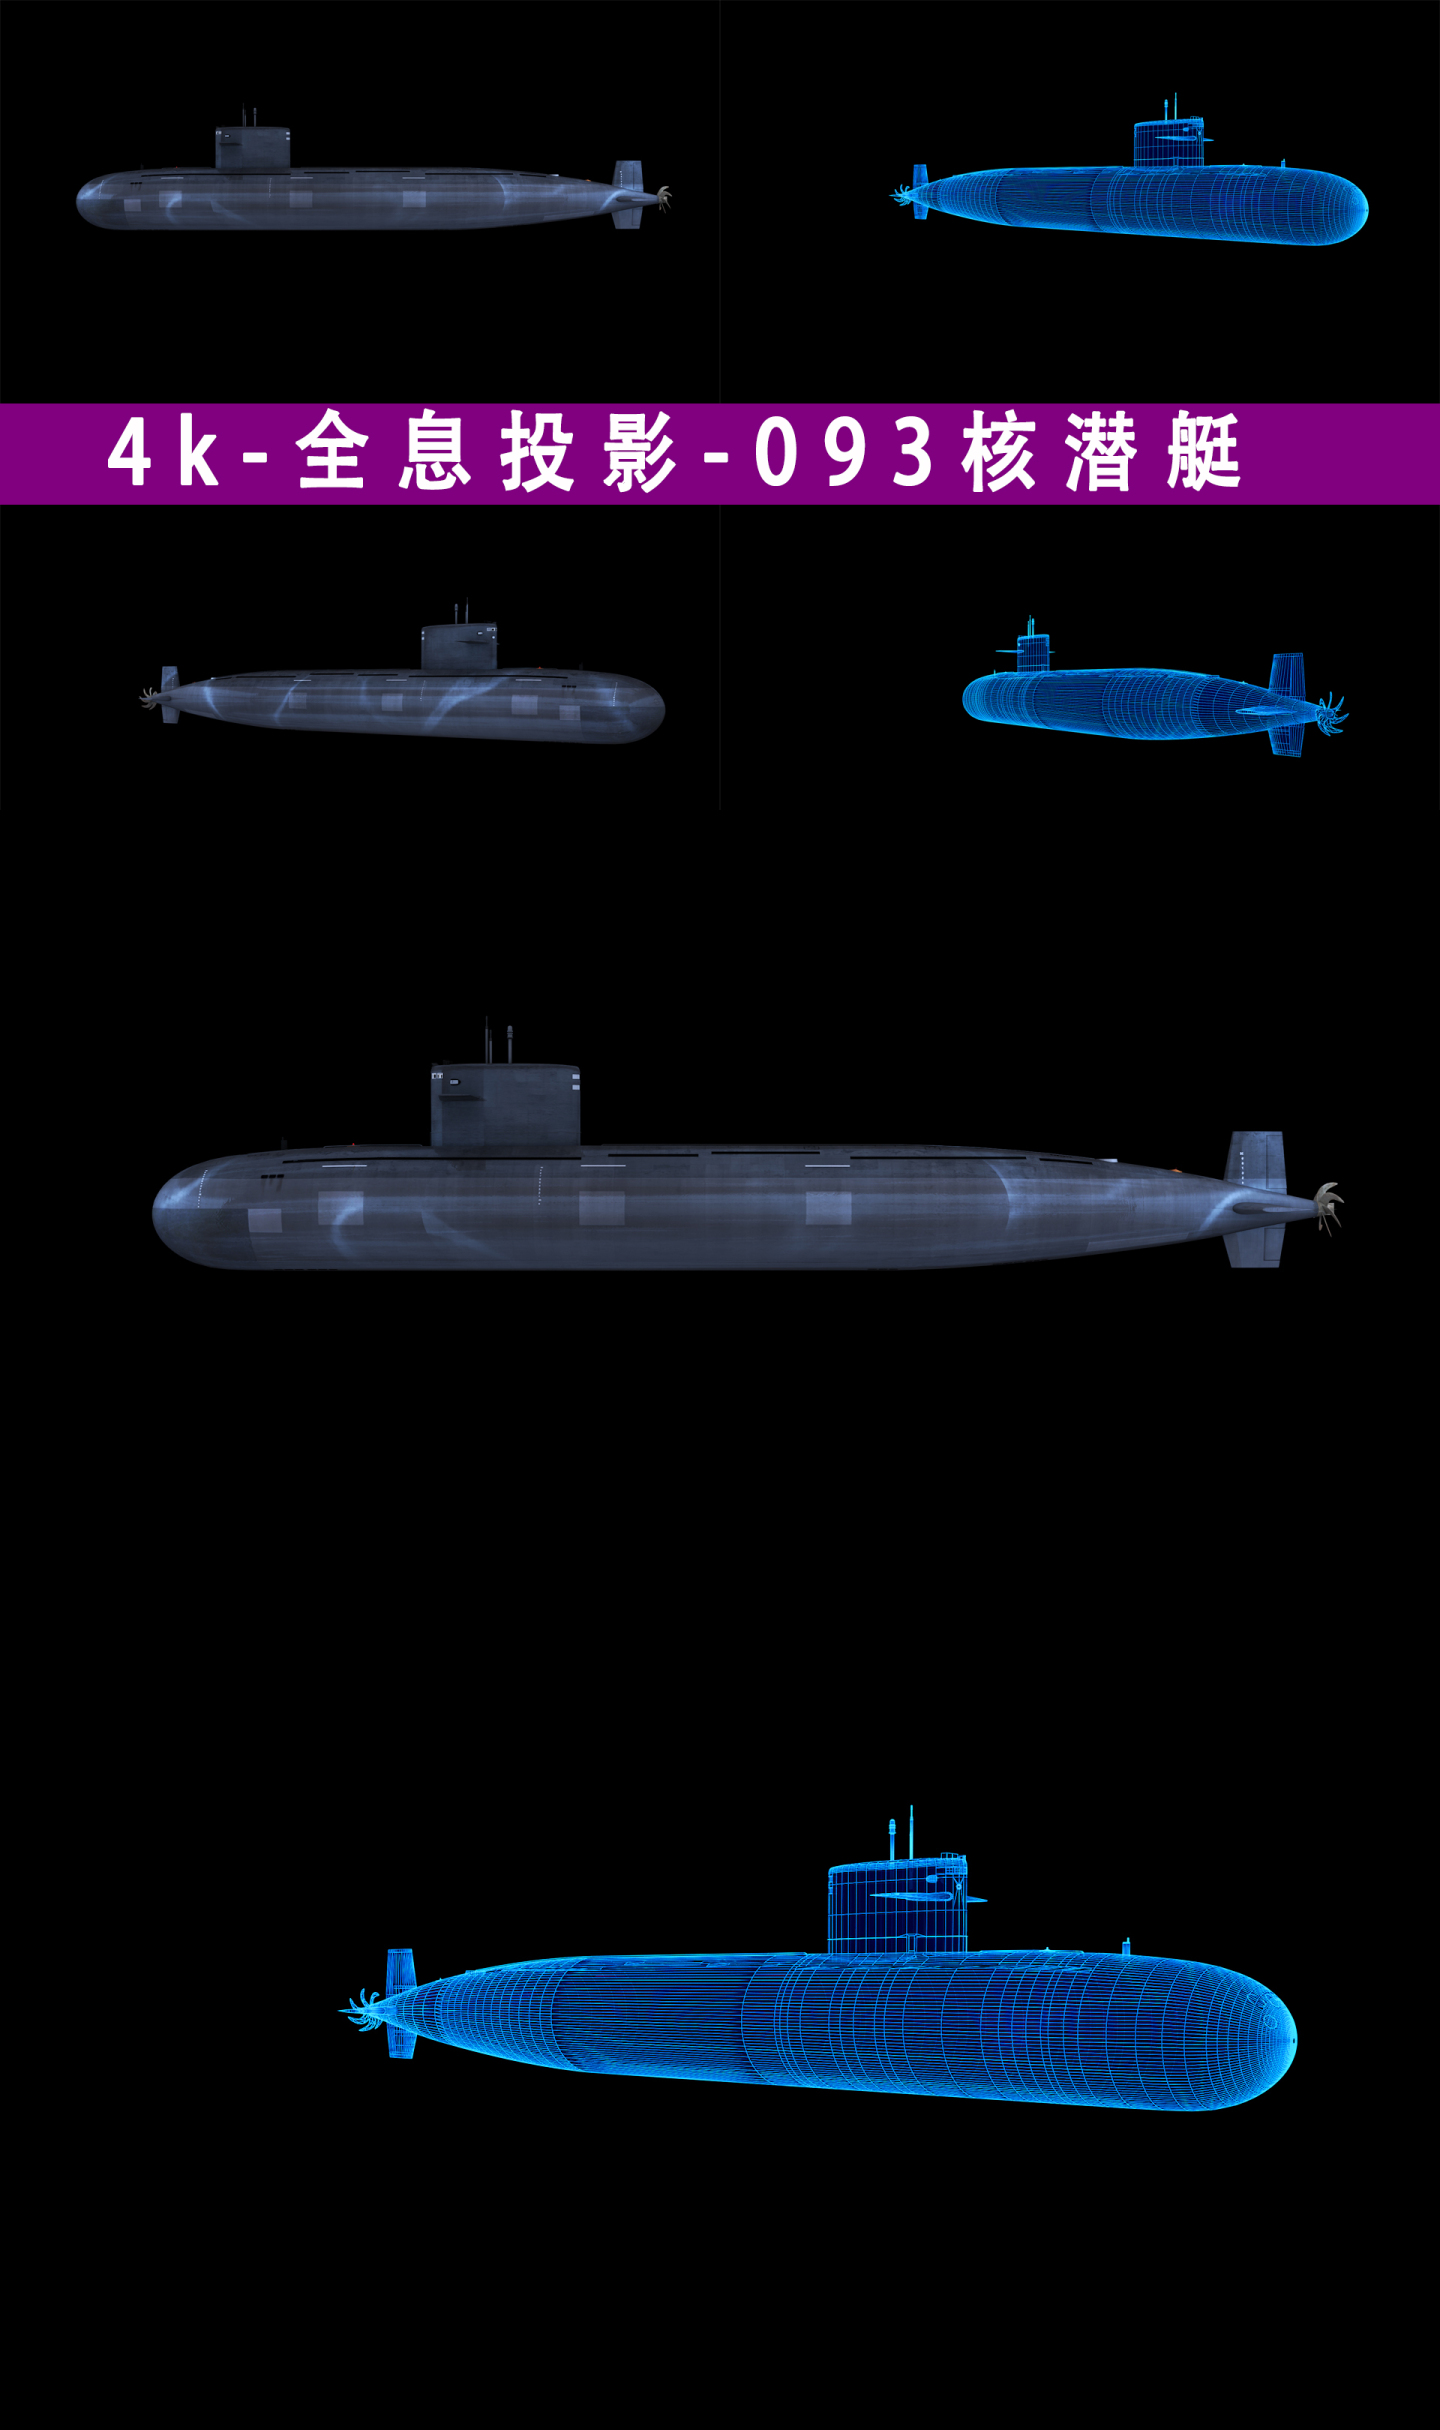 4k_全息投影_093型_核潜艇